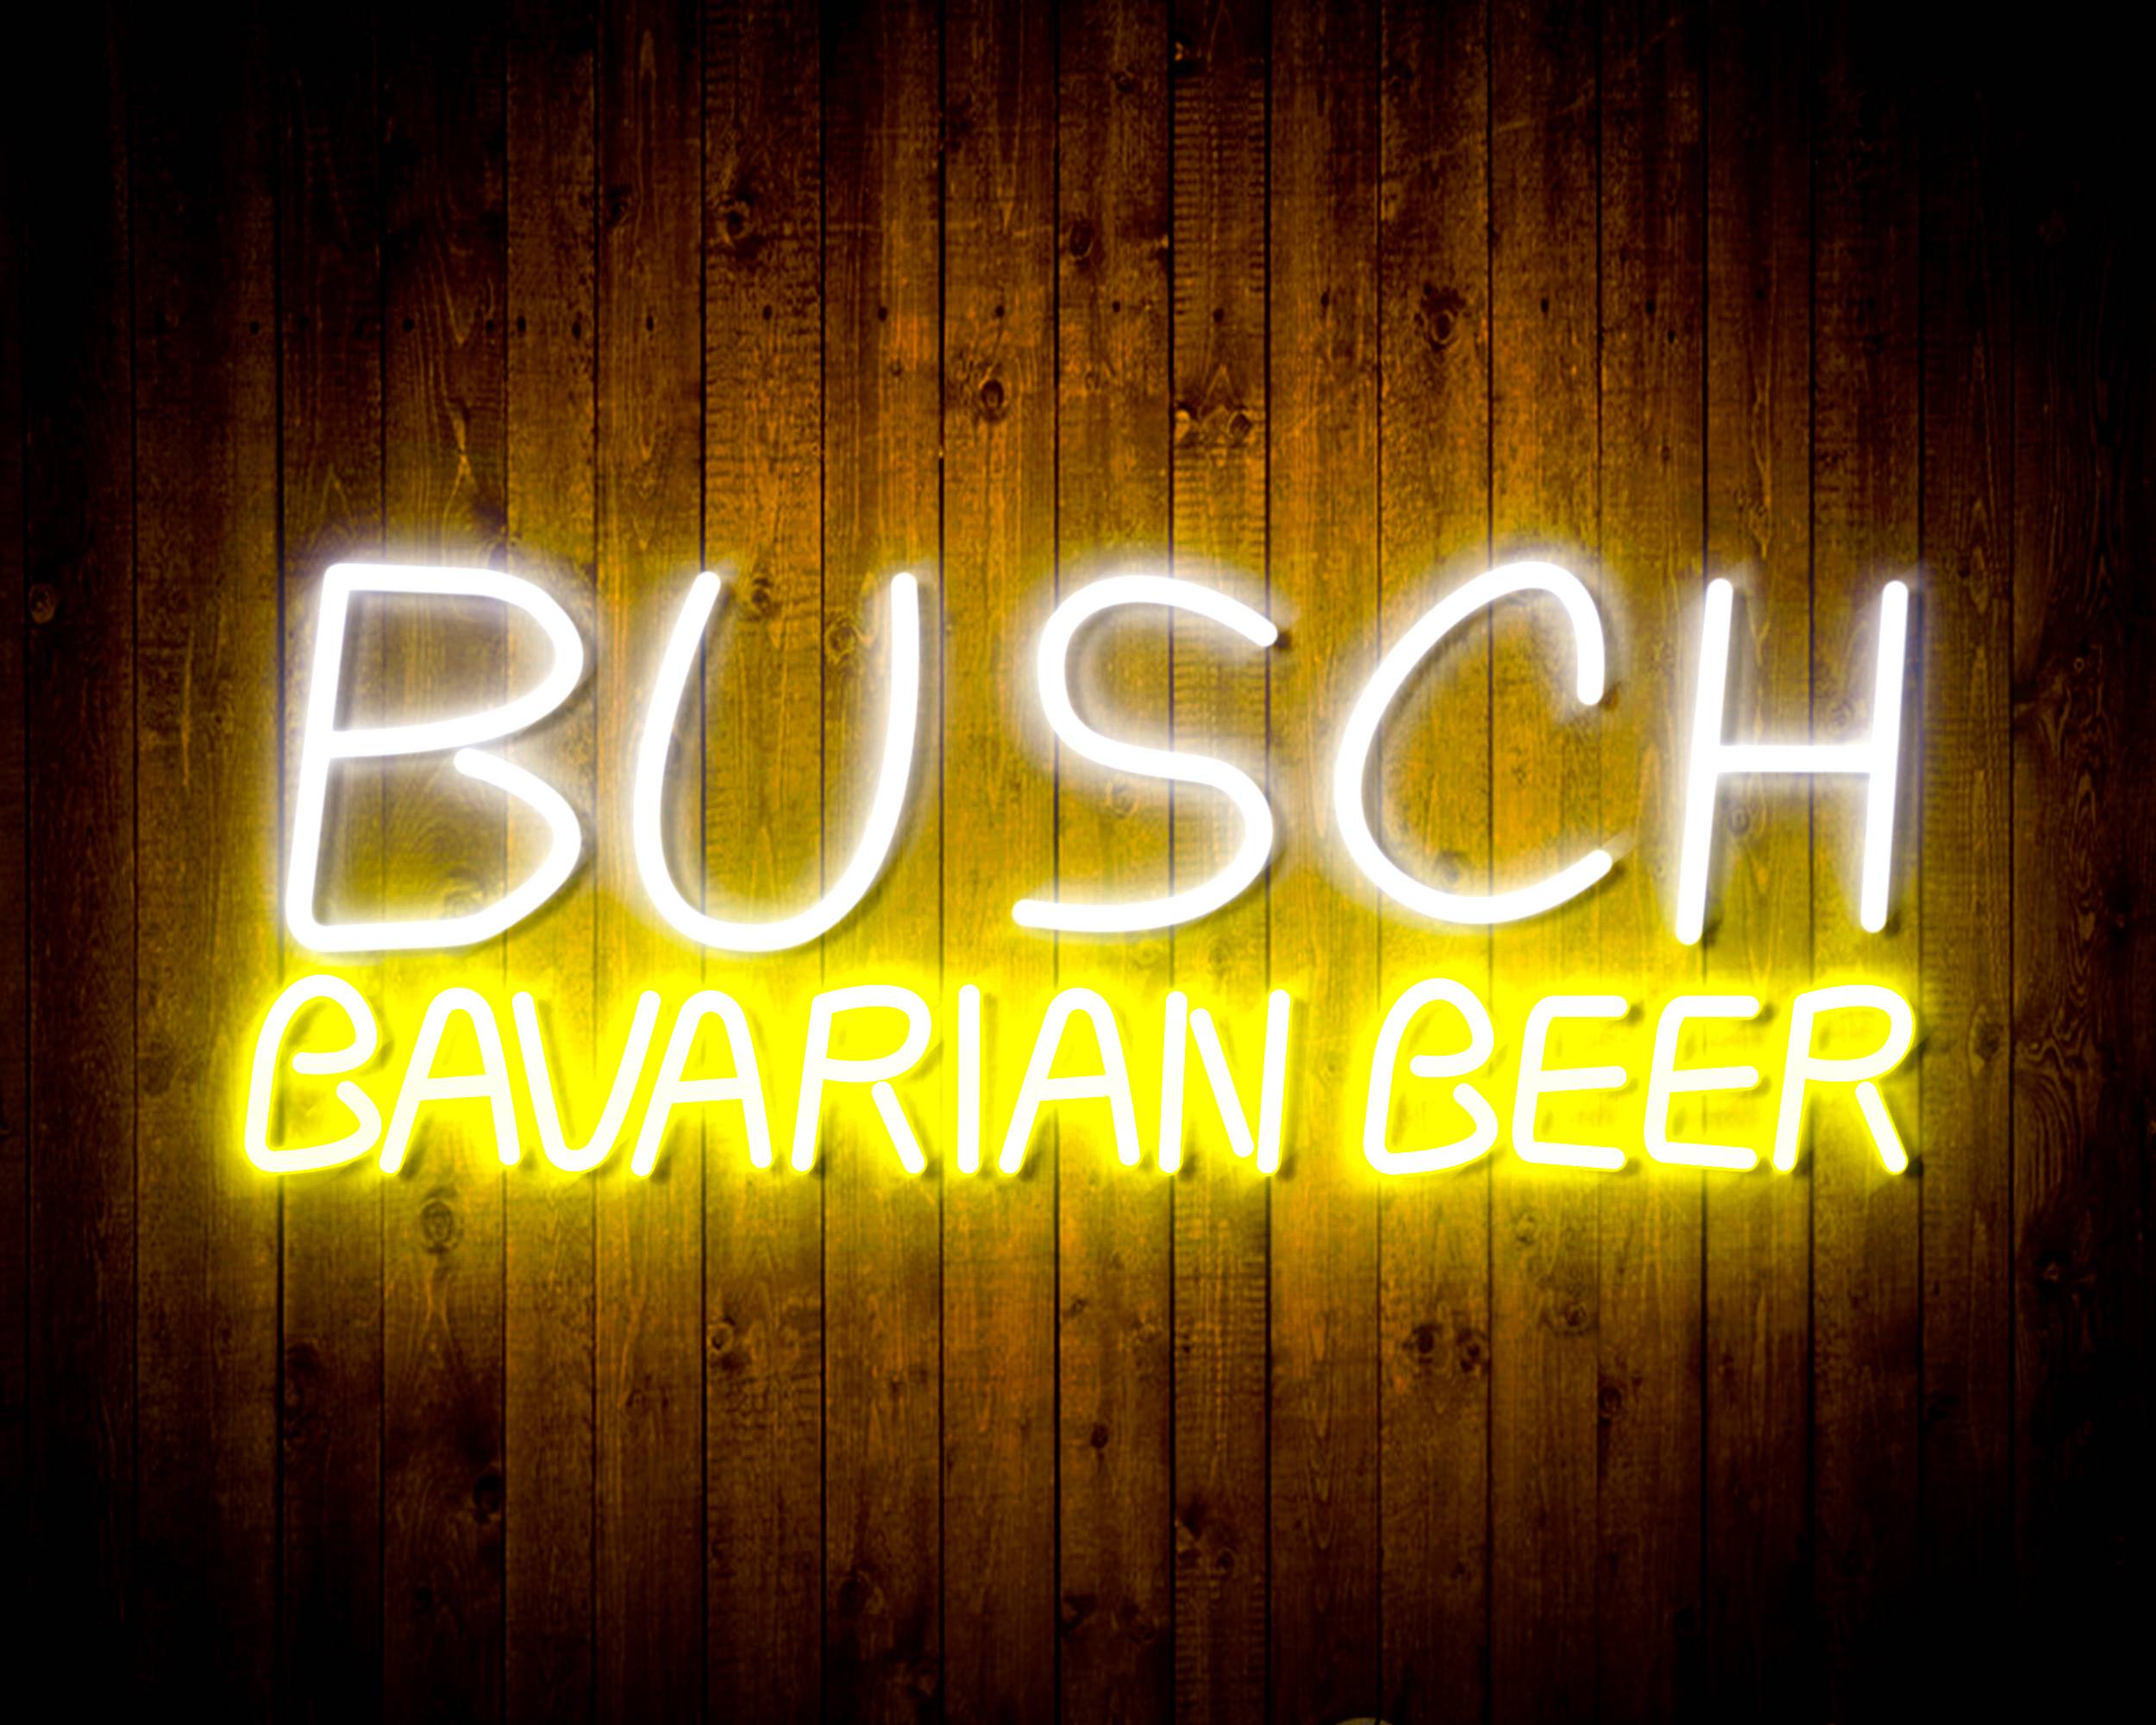 Busch Bavarian Beer Bar Neon LED Sign